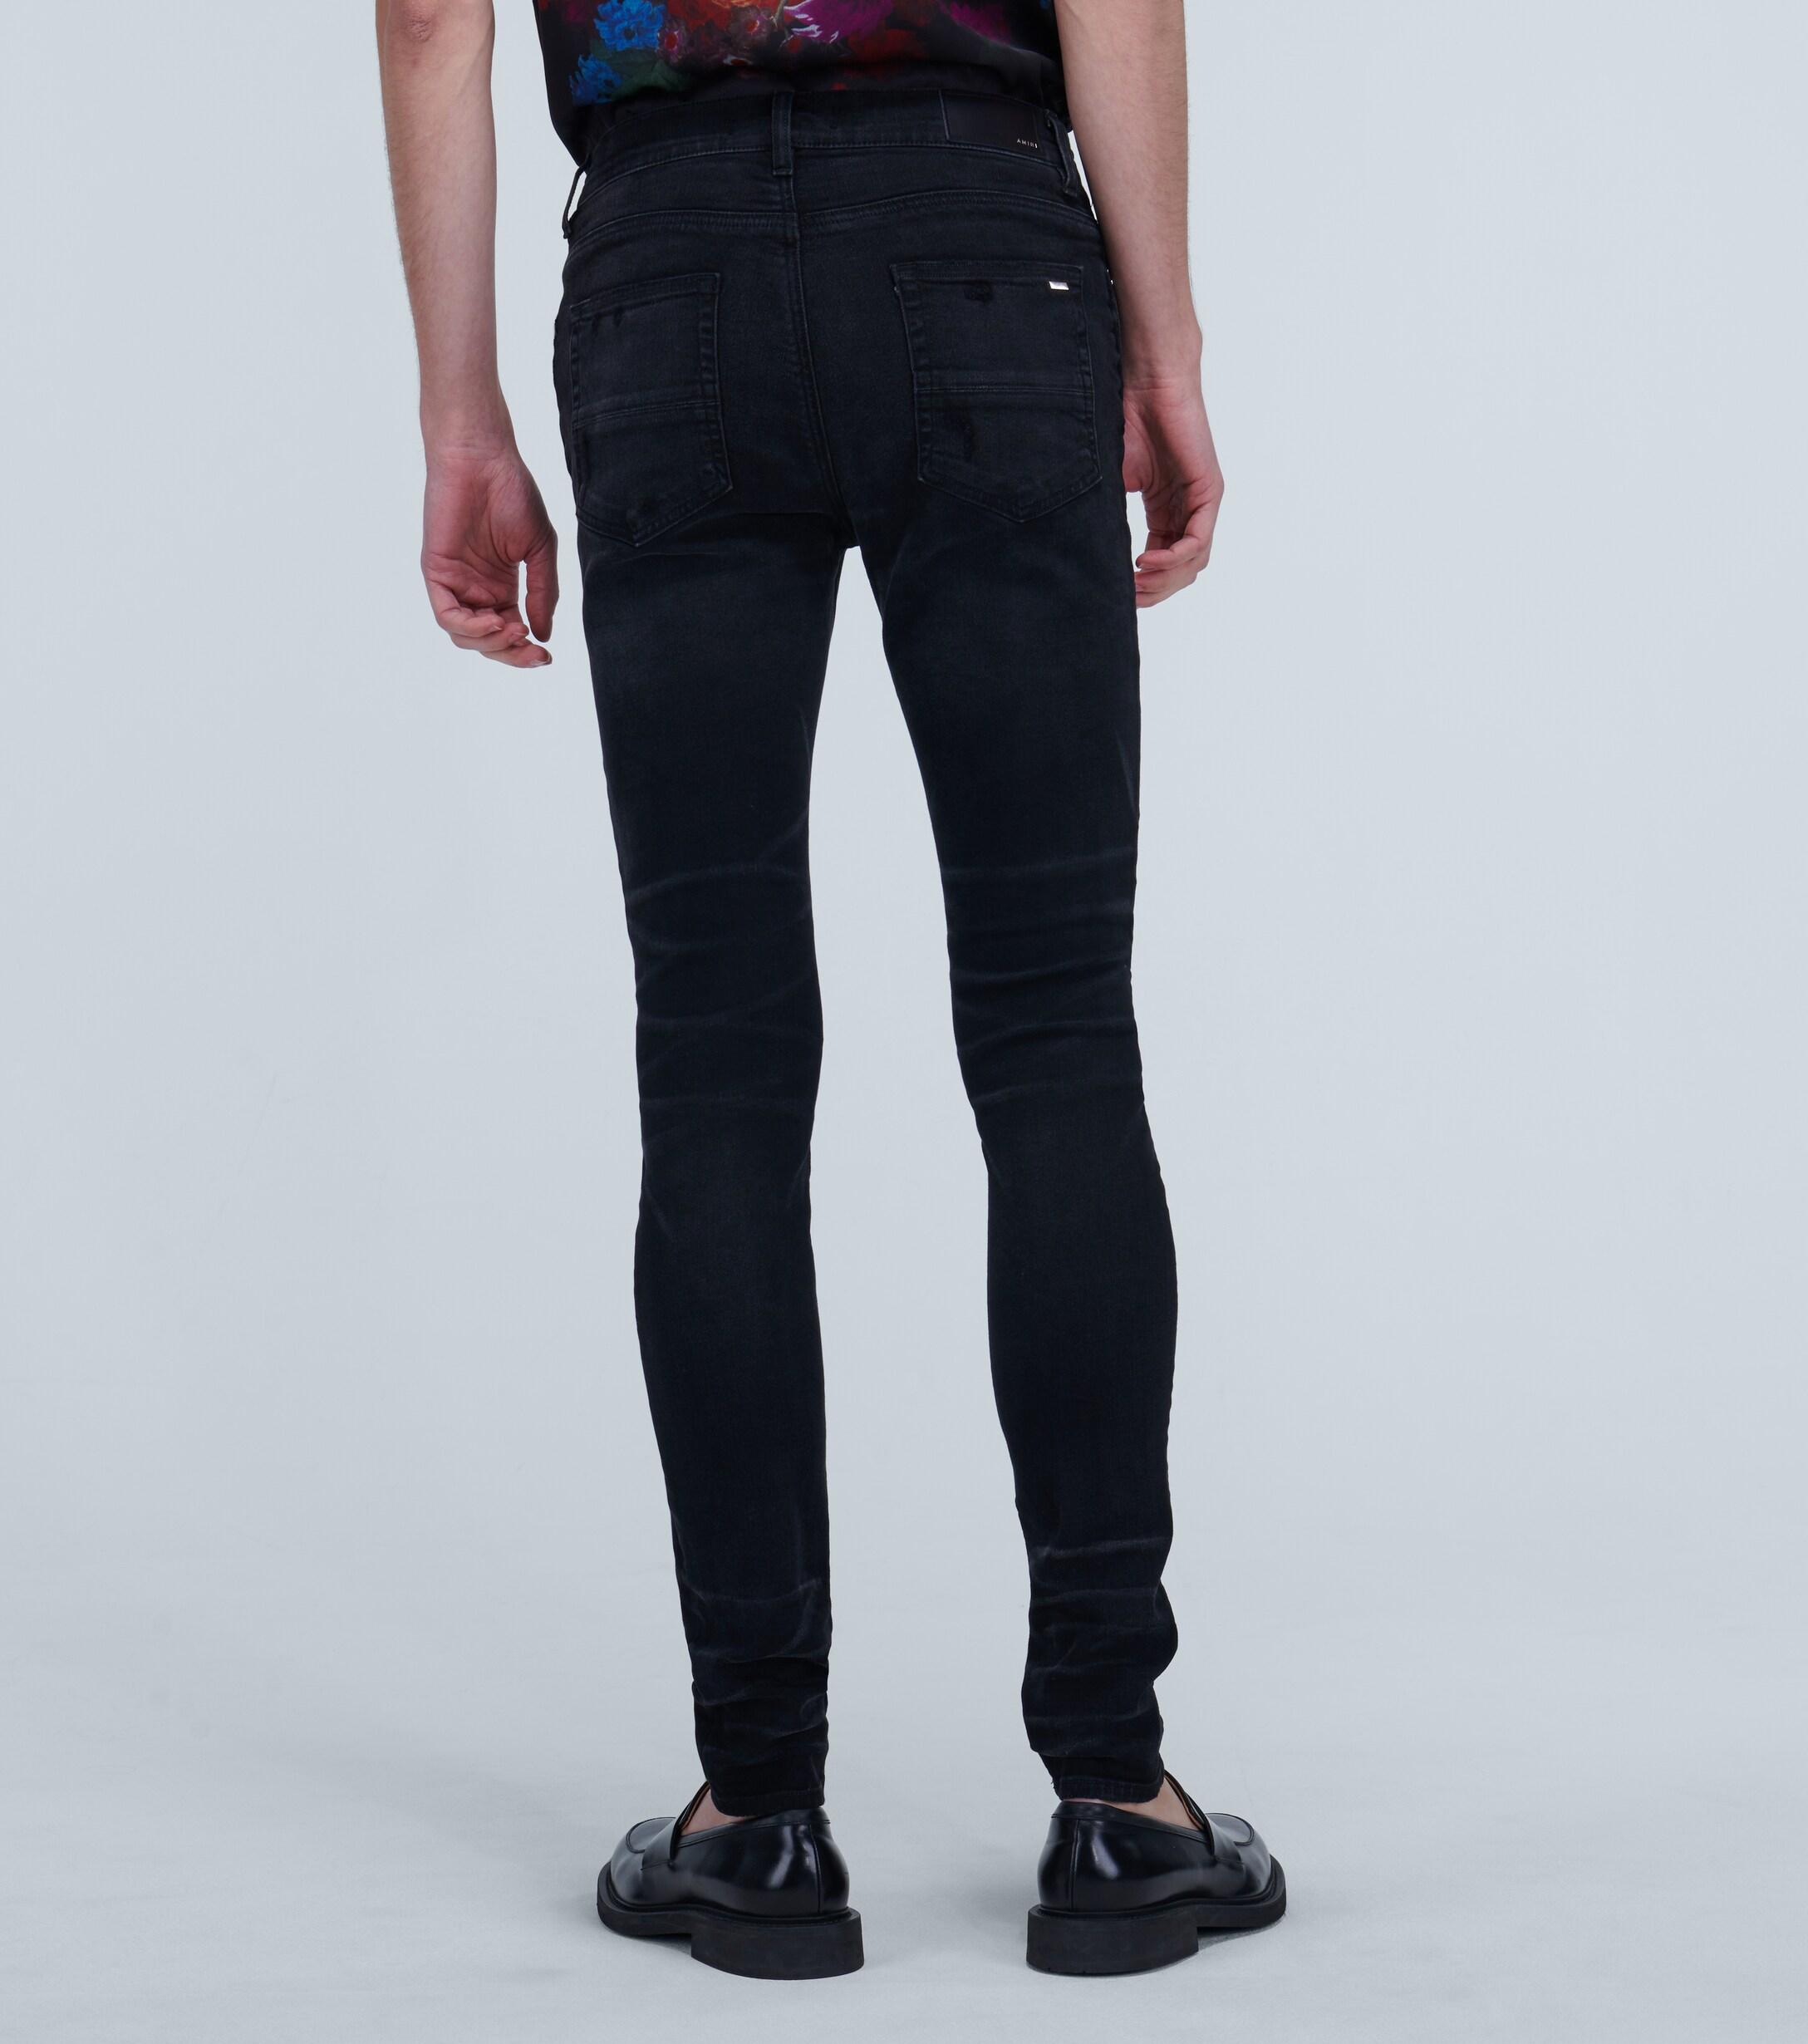 Amiri Denim Stack Jeans in Black for Men - Lyst